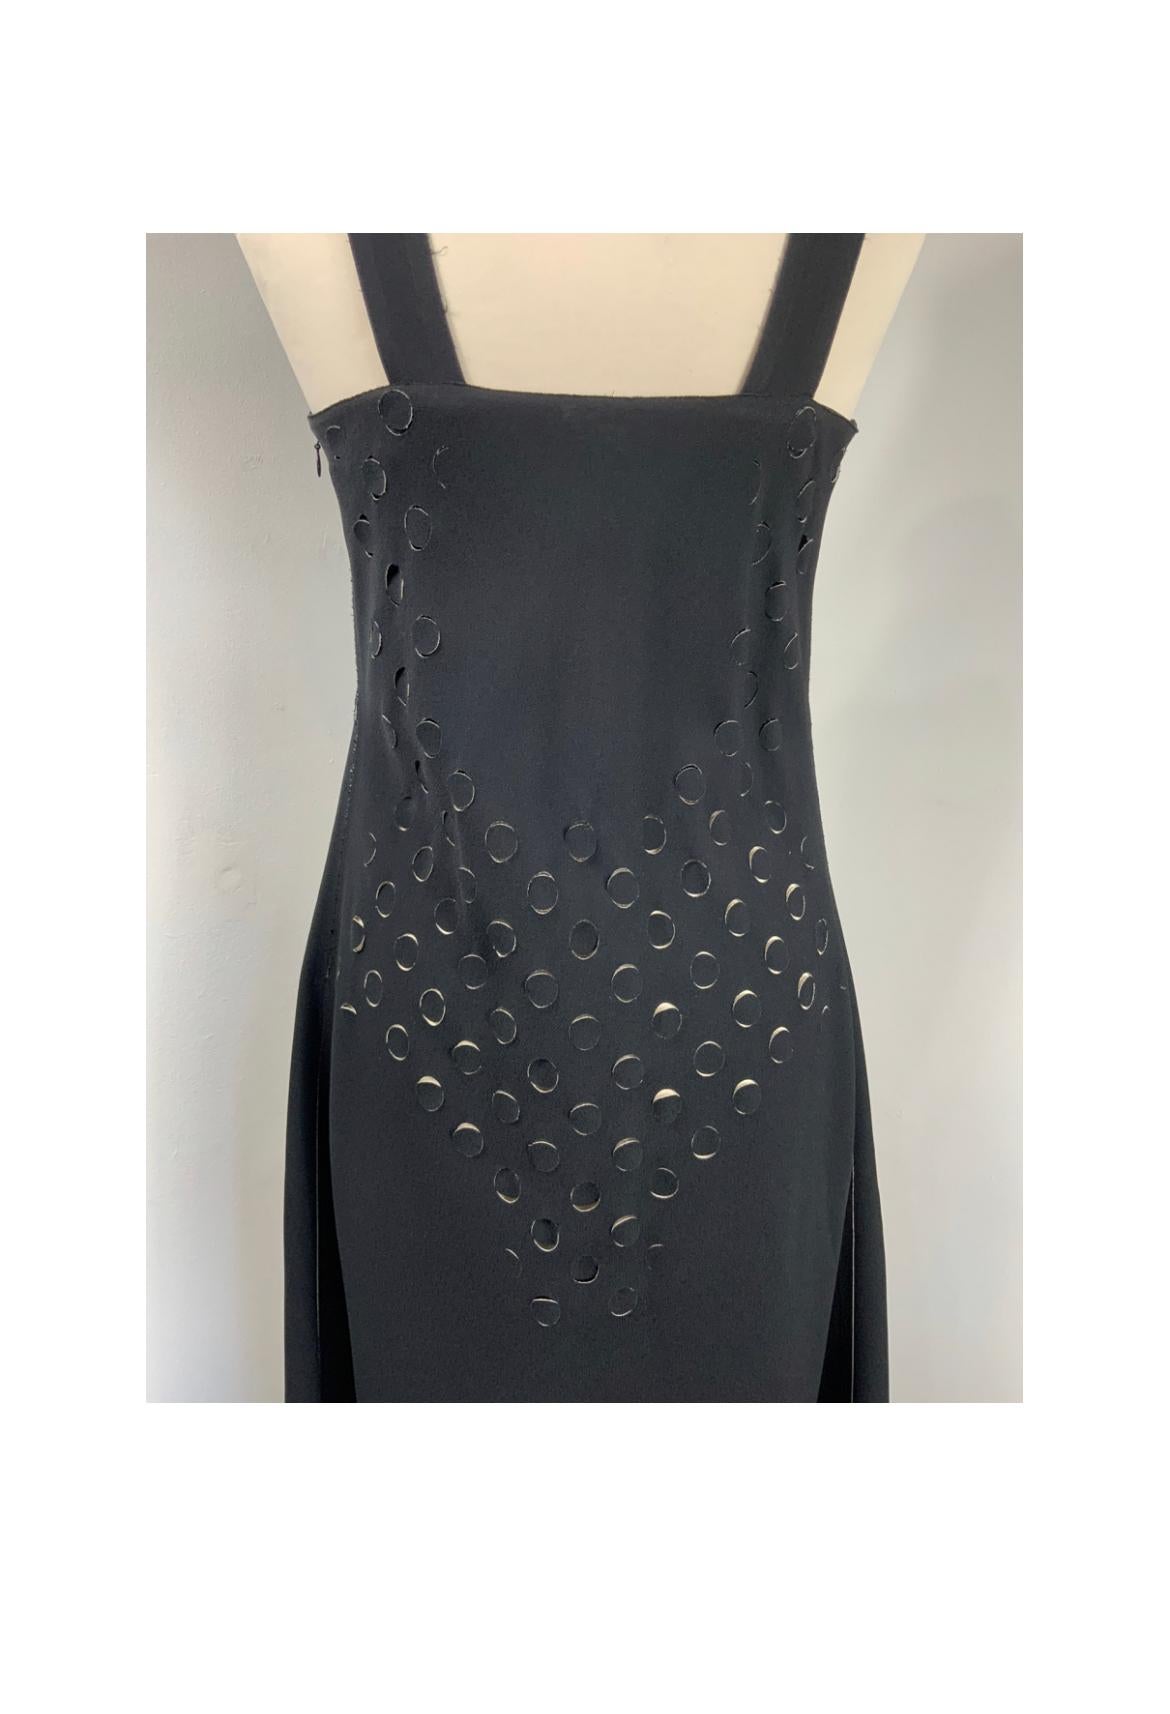 Maison Martin Margiela black dress. For Sale 4